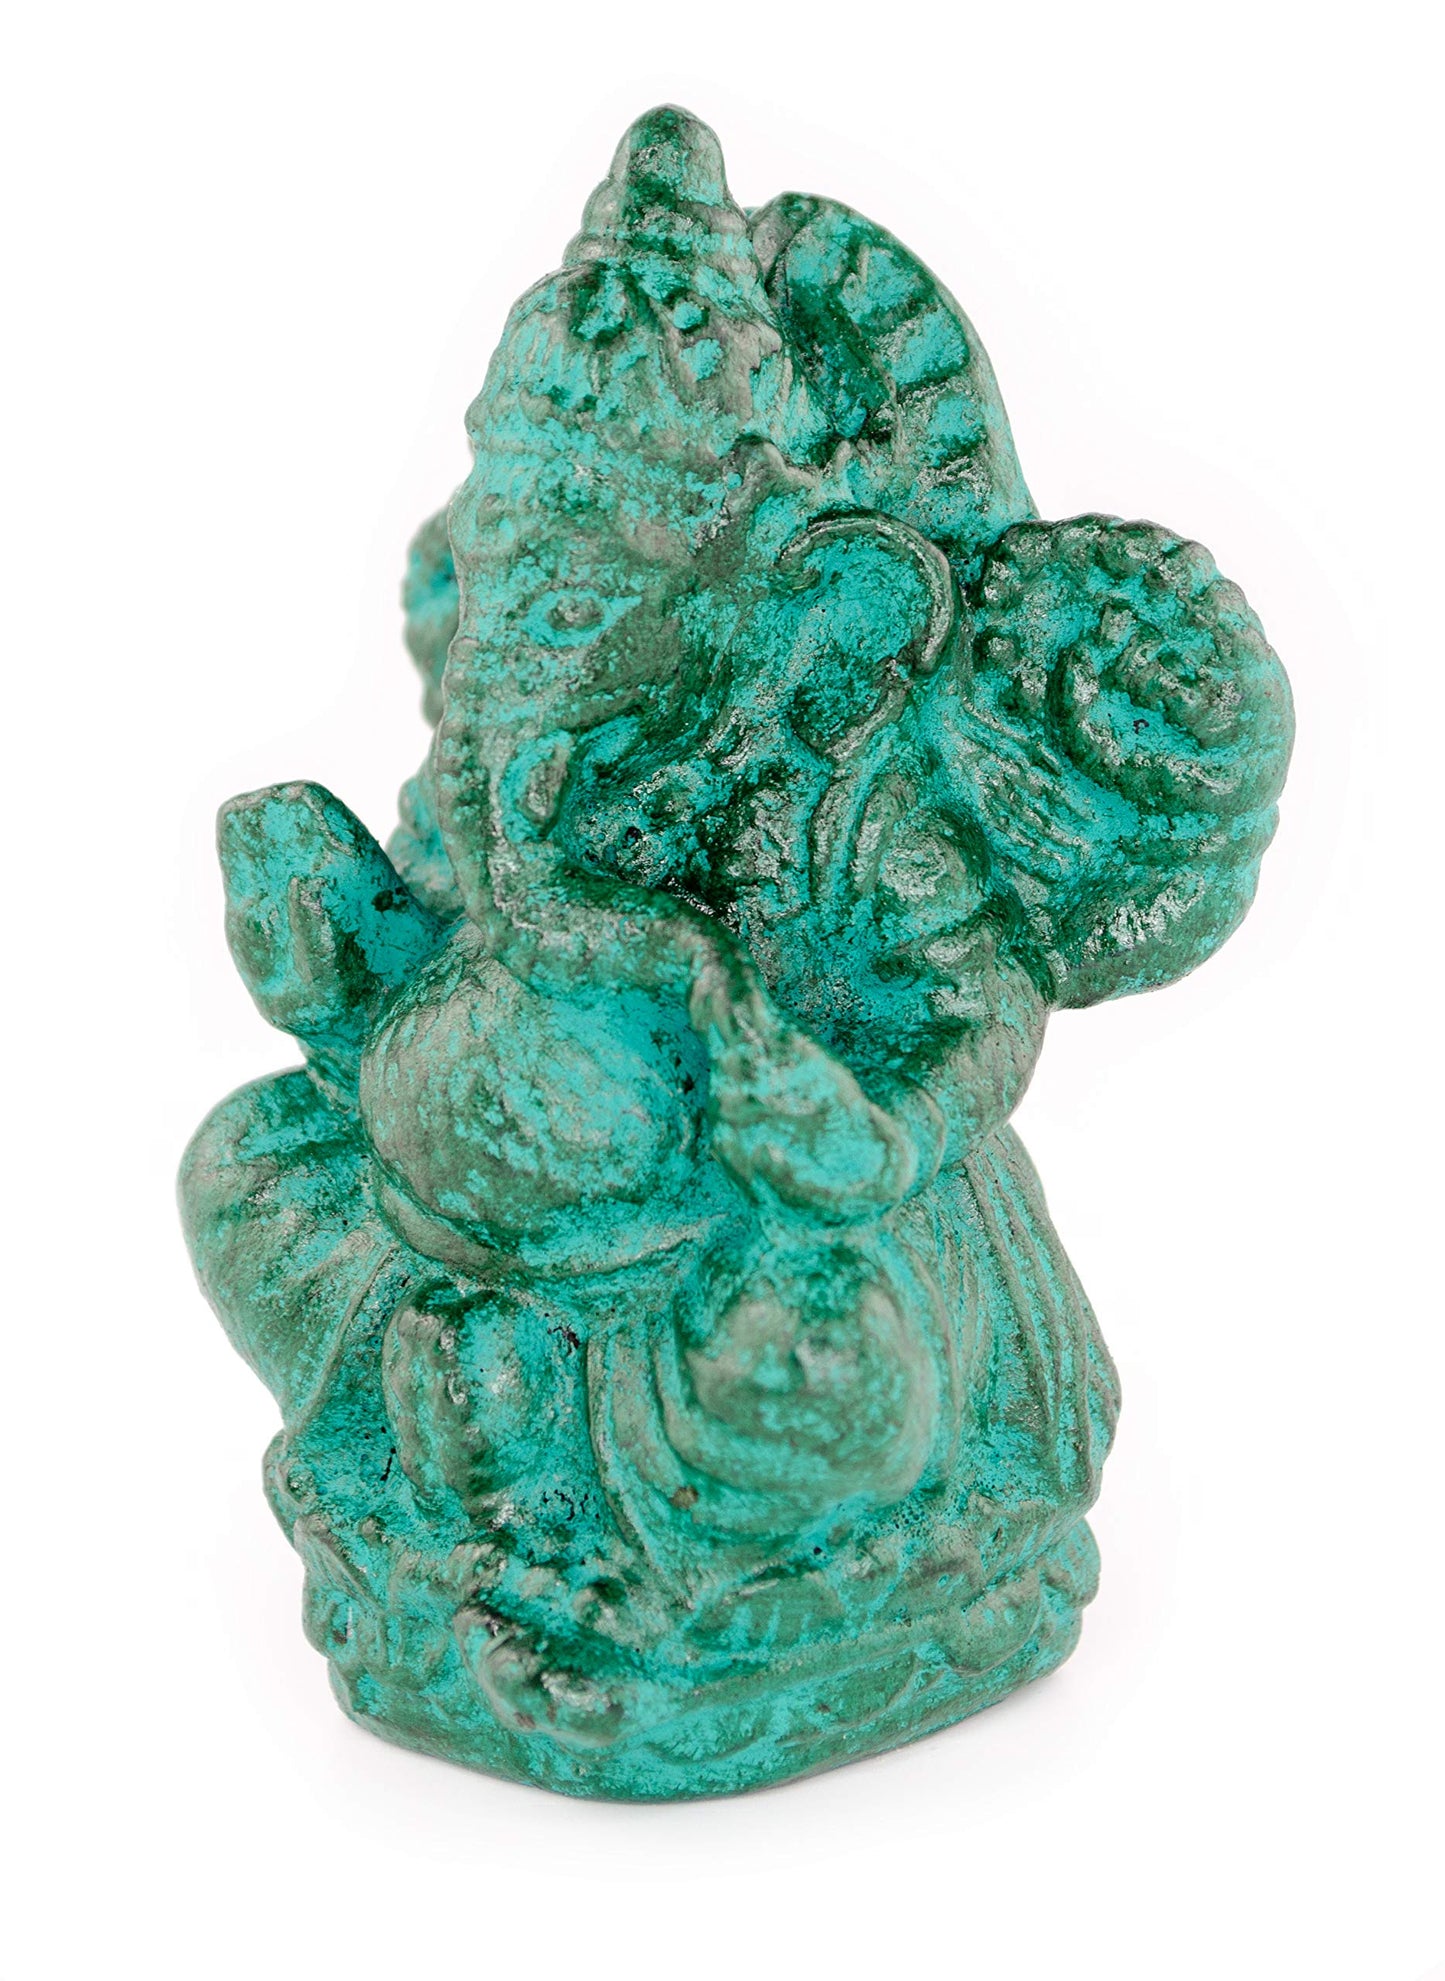 FaHome Ganesha Skulptur Hindu Gottheit Stein Figur Glück Statue ca. 12 cm Elefant Grün